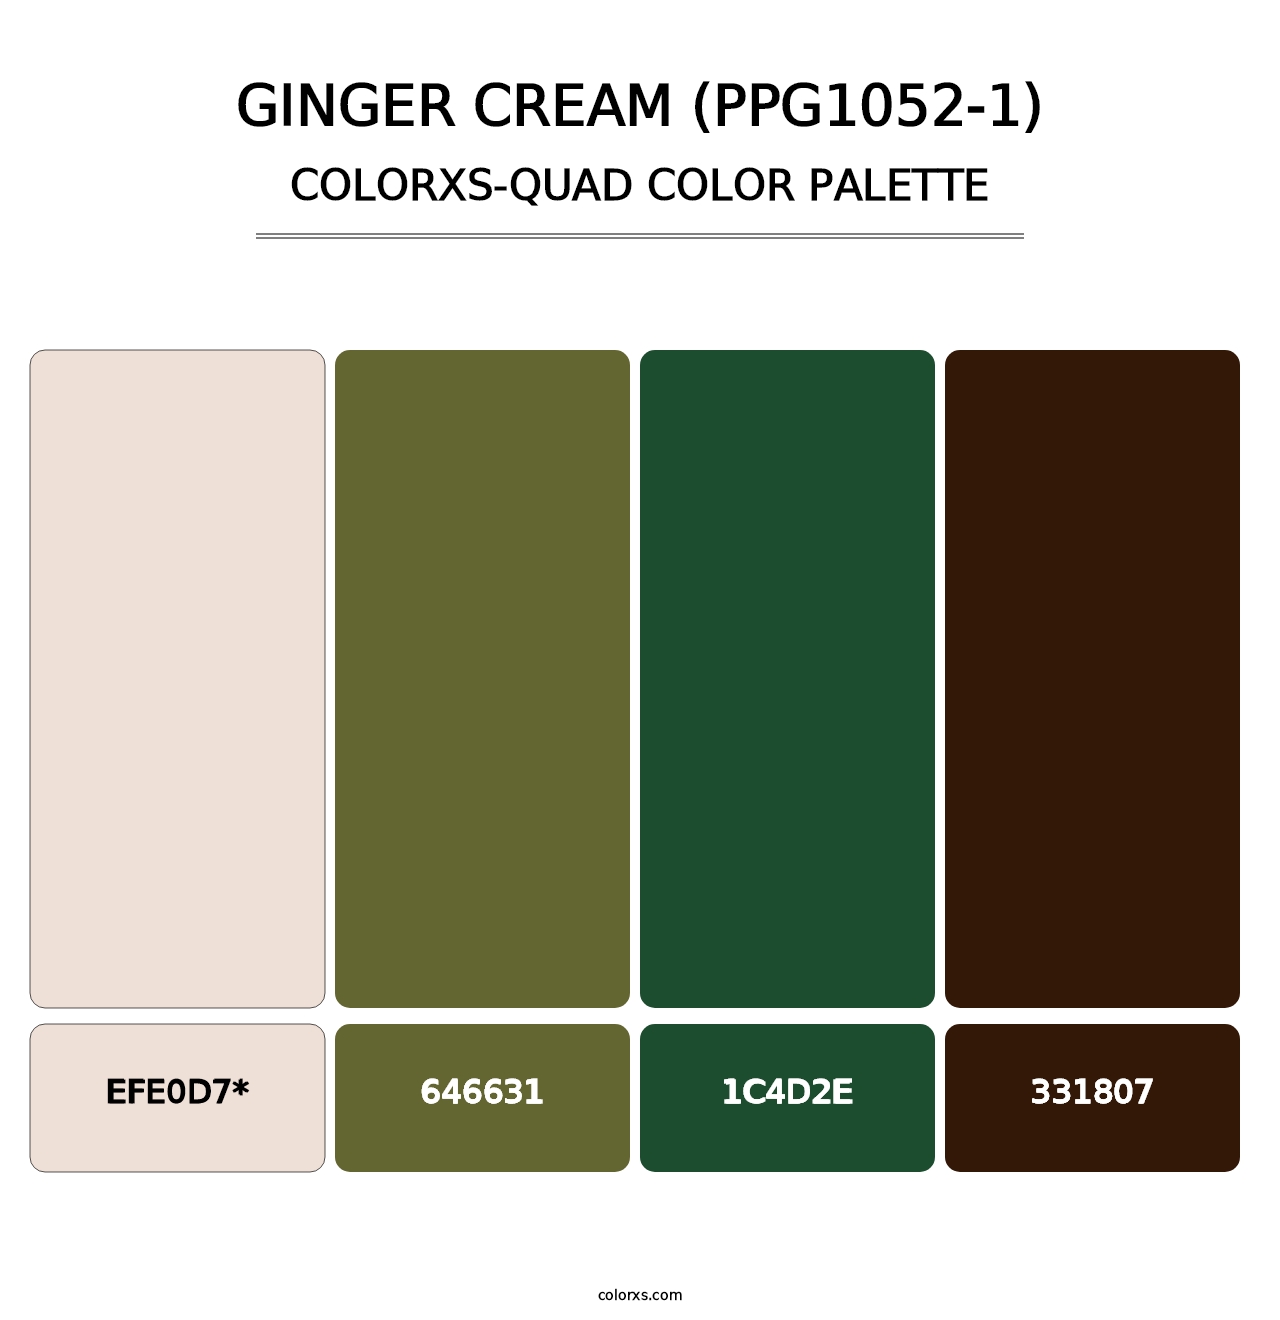 Ginger Cream (PPG1052-1) - Colorxs Quad Palette